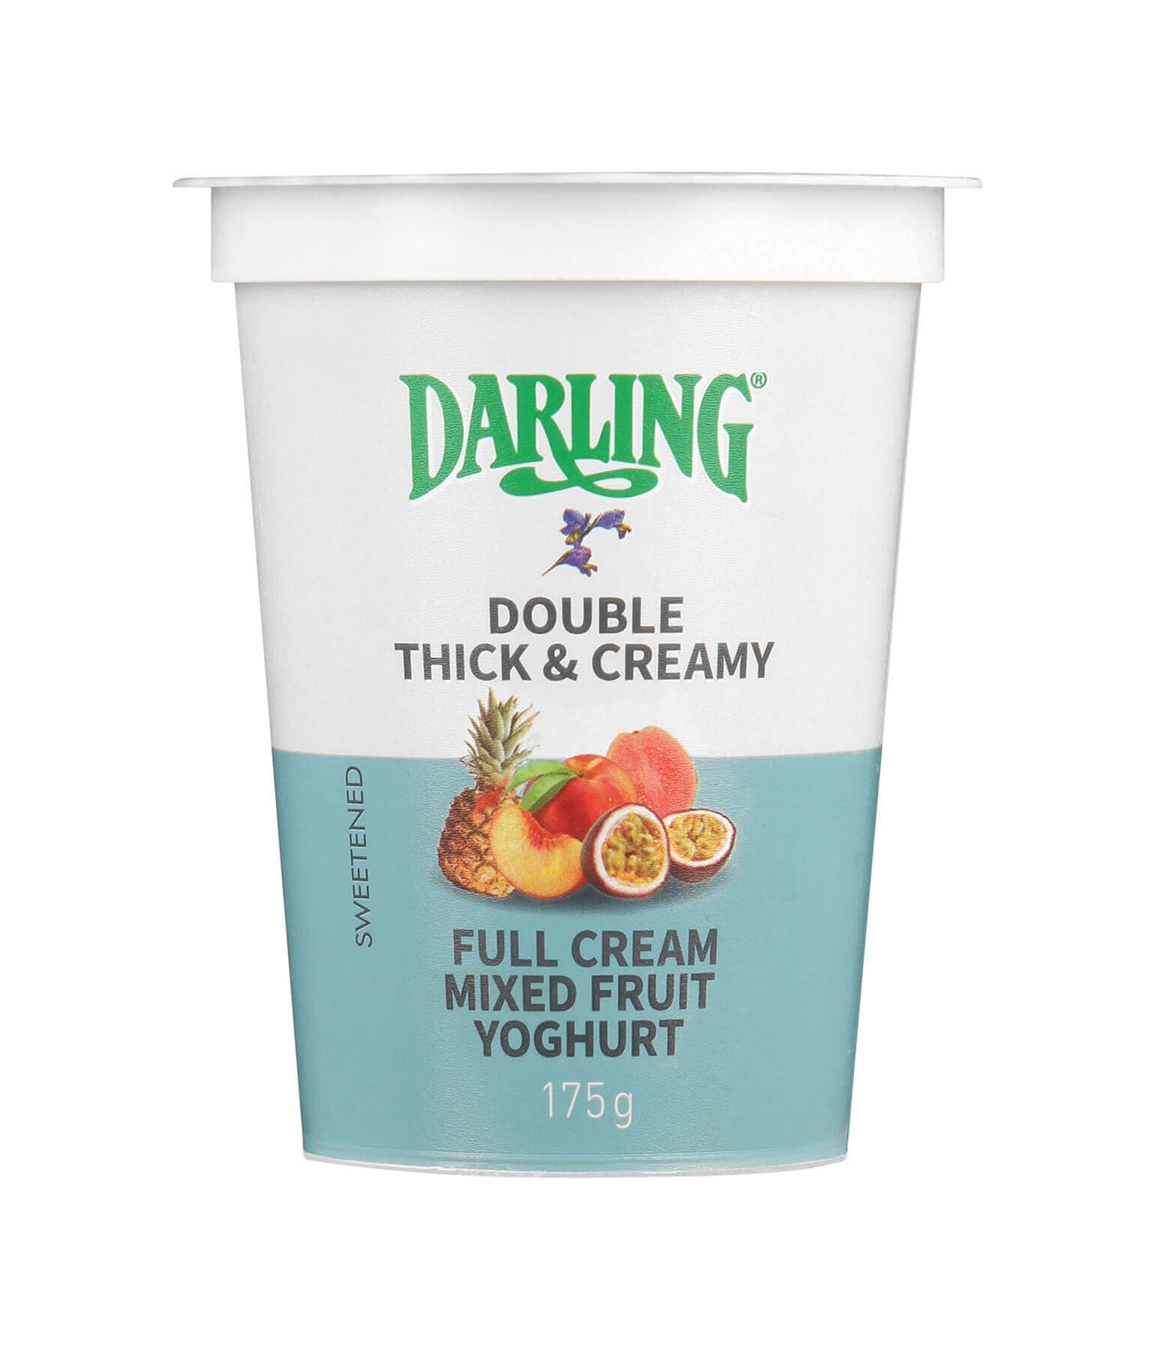 https://eshop.checkersfs.co.za/content/images/thumbs/0007464_darling-mixed-fruit-fruit-full-cream-yoghurt-175g.jpeg